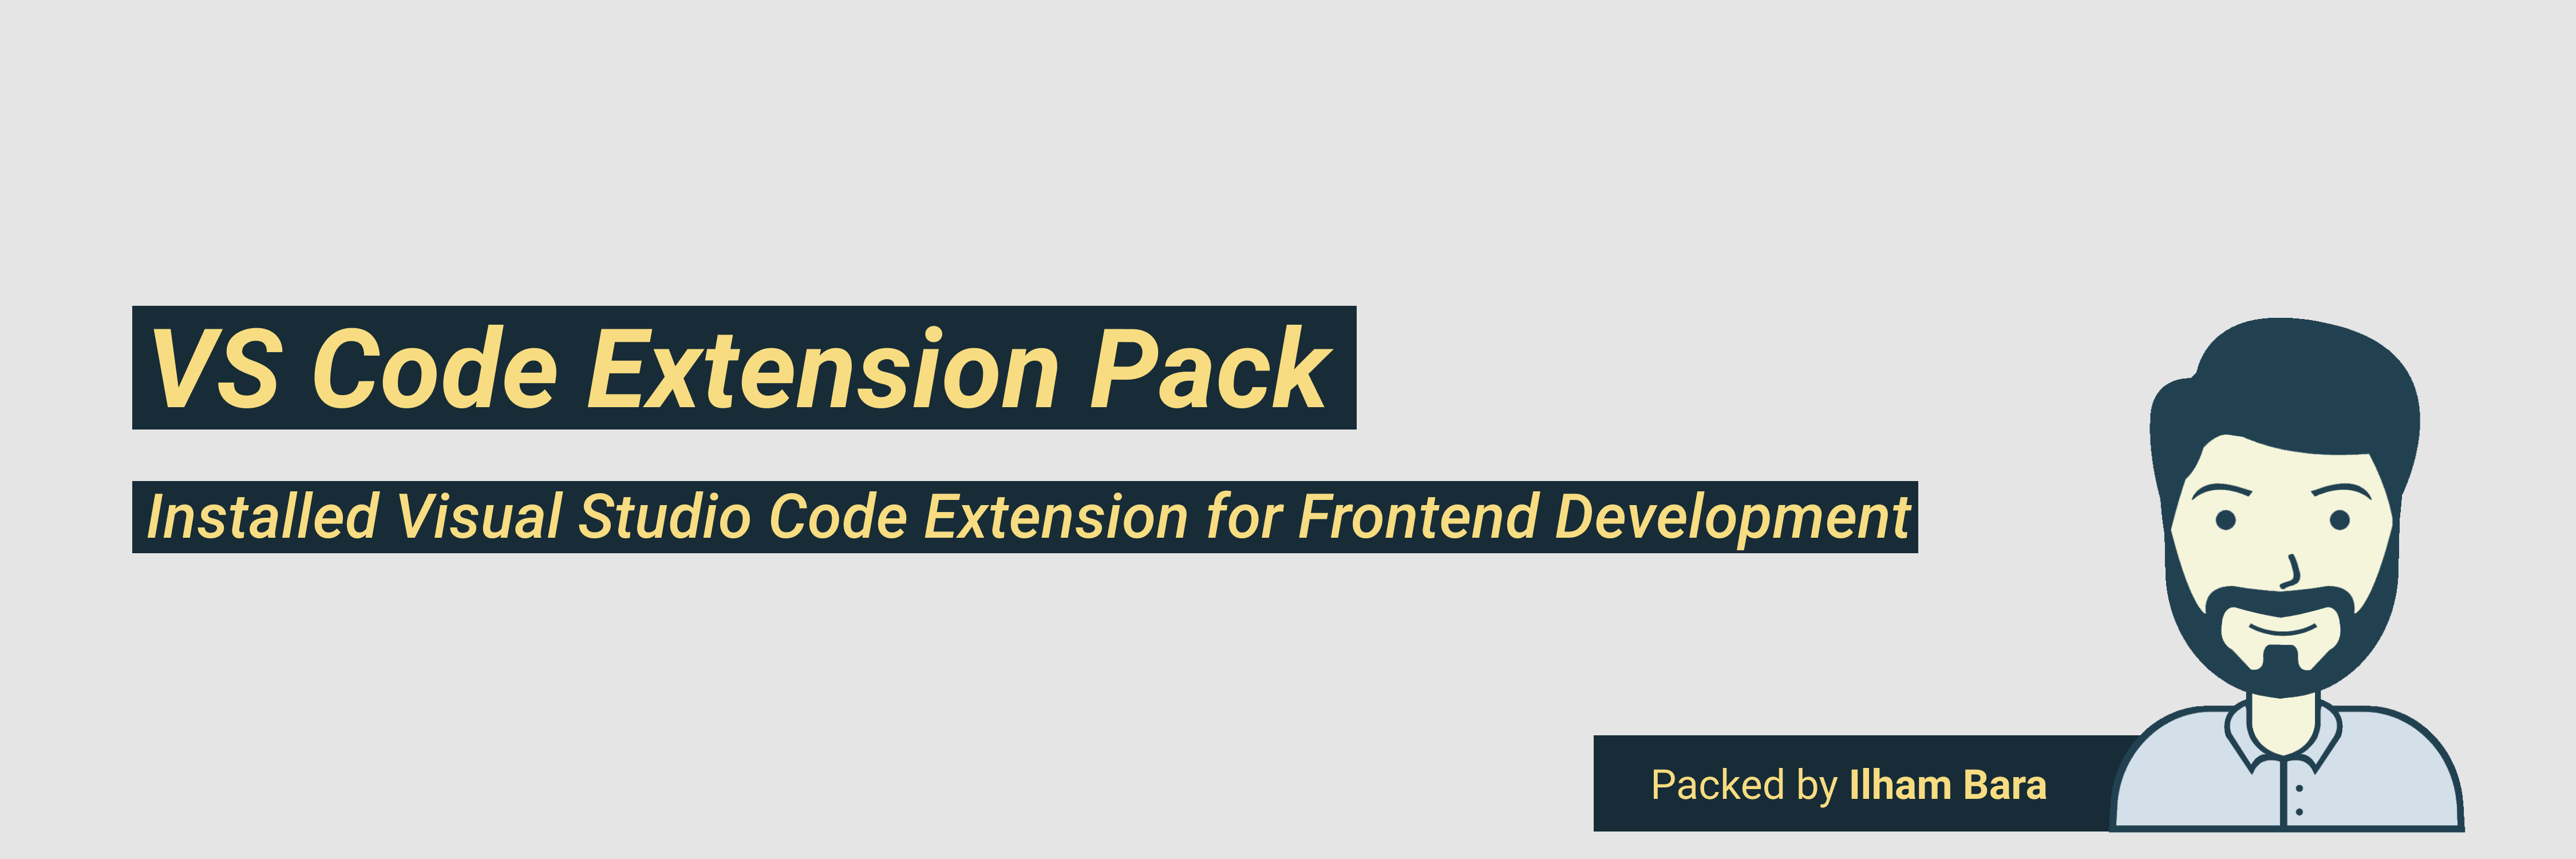 vscode-extension-pack